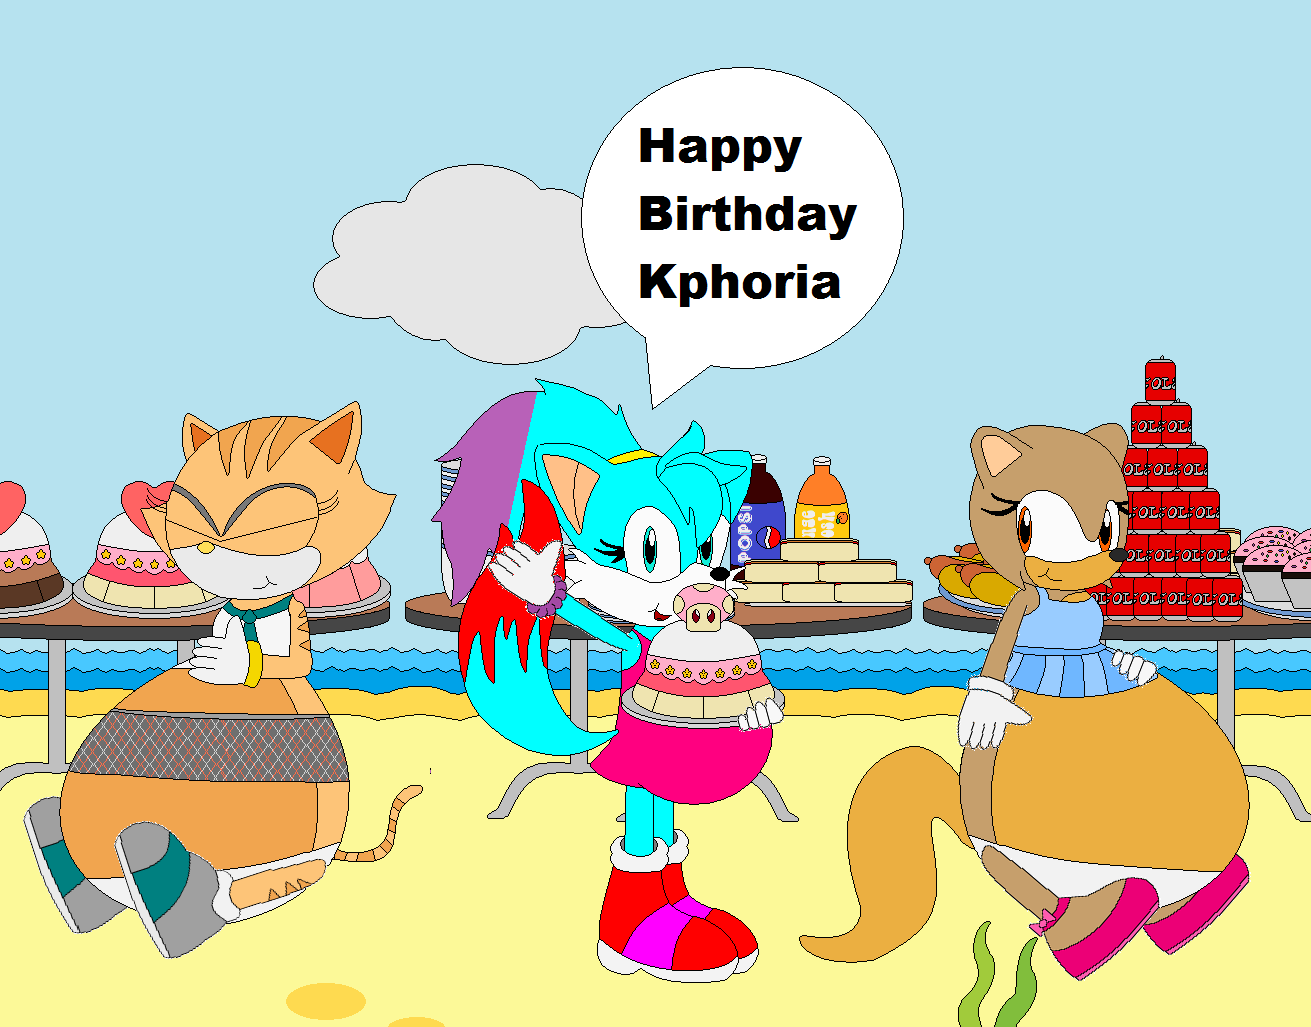 Happy Birthday Kphoria By Sarah The Fox2 On Deviantart